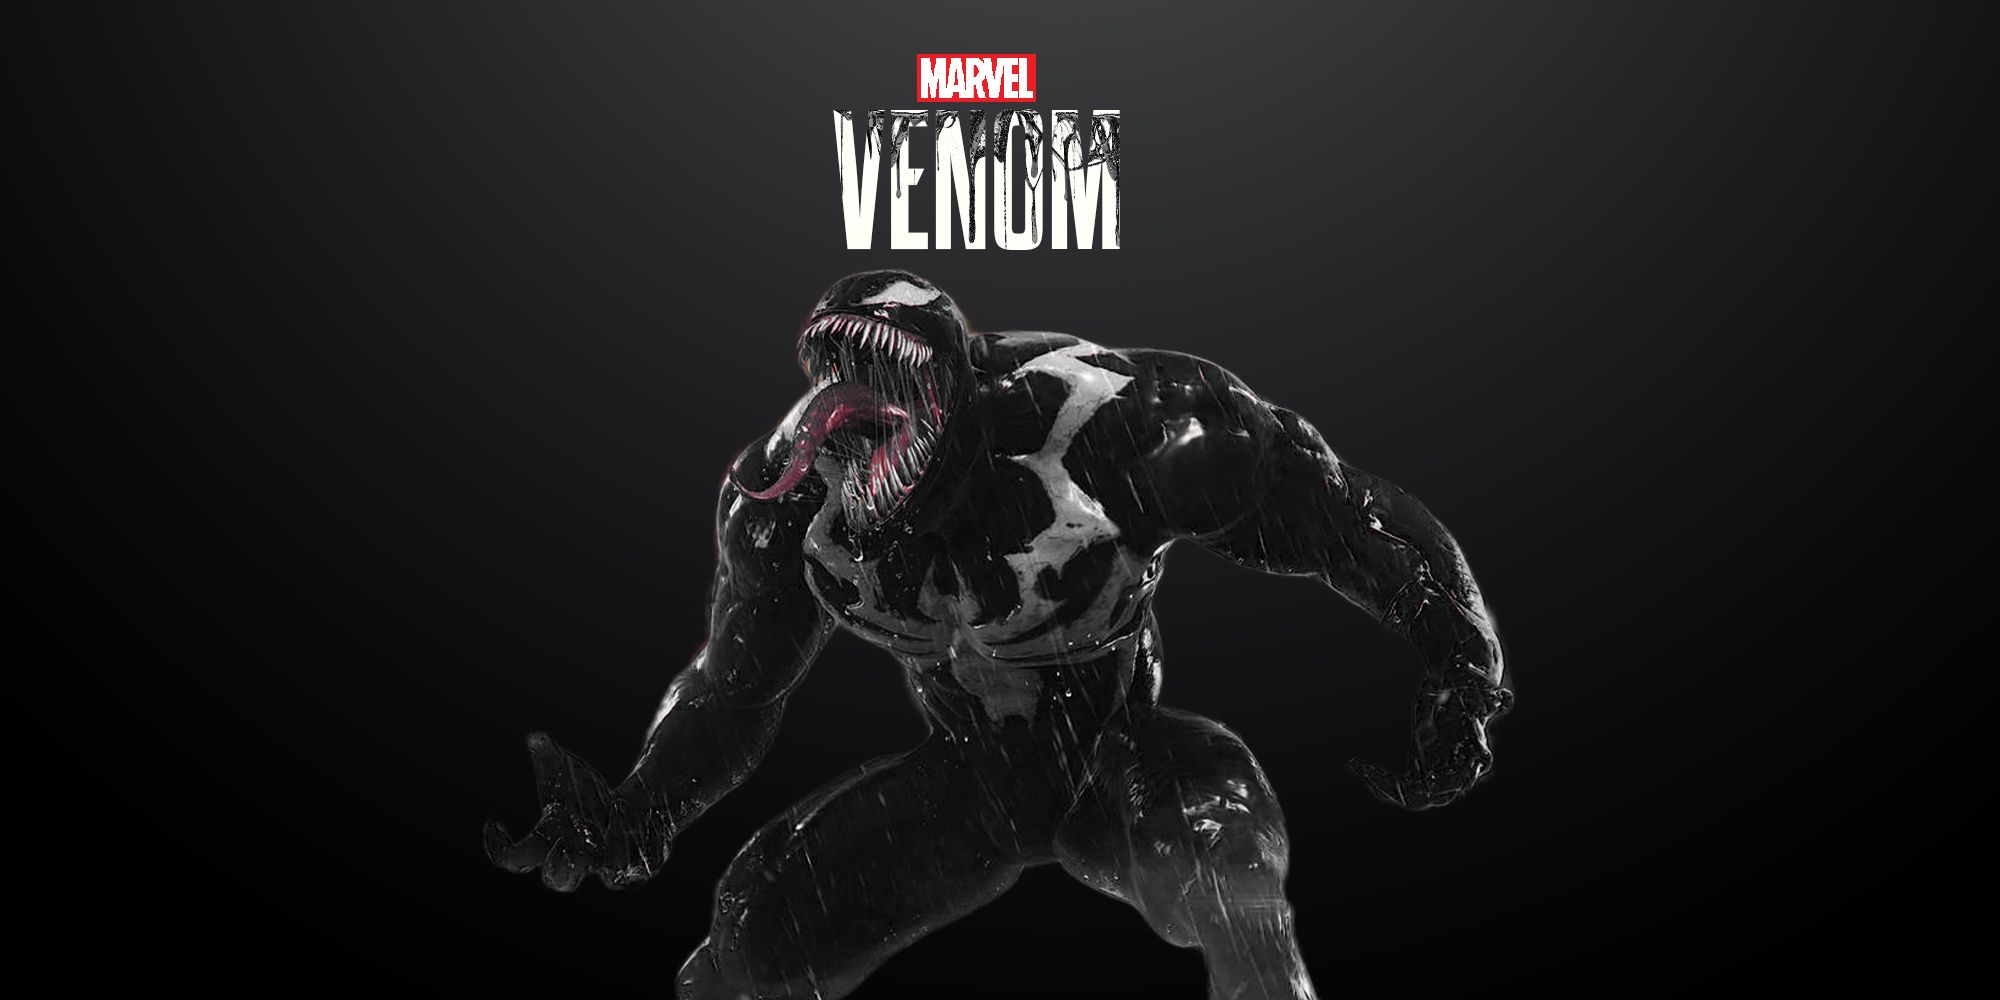 Spider-Man 2 director spill on potential Venom spin-off game